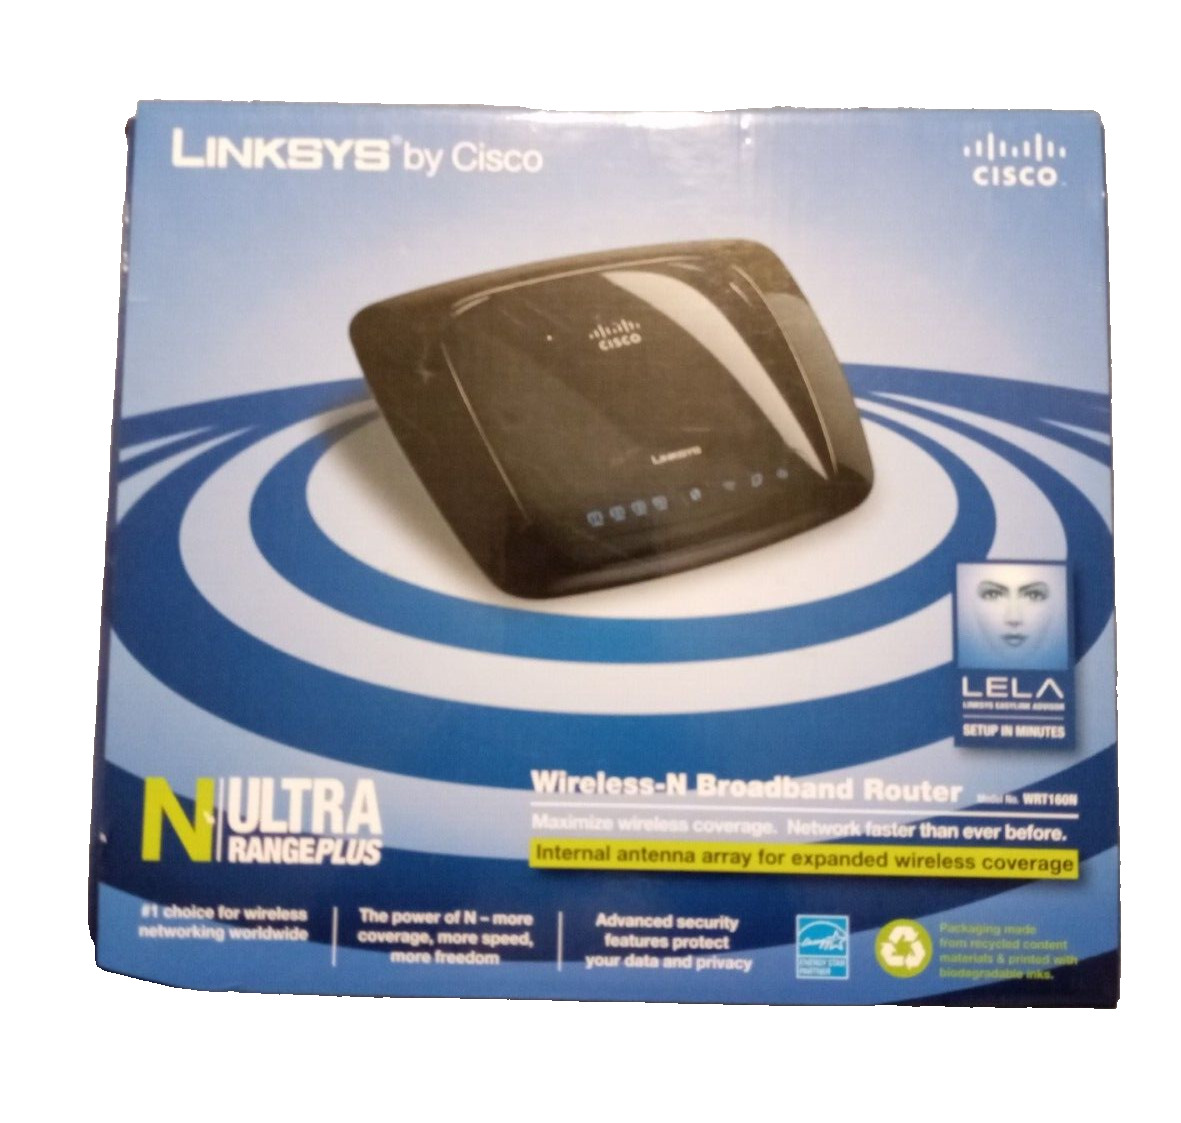 Linksys ultra range plus wireless -N Broadband Router WRT160N V2 by Cisco boxed